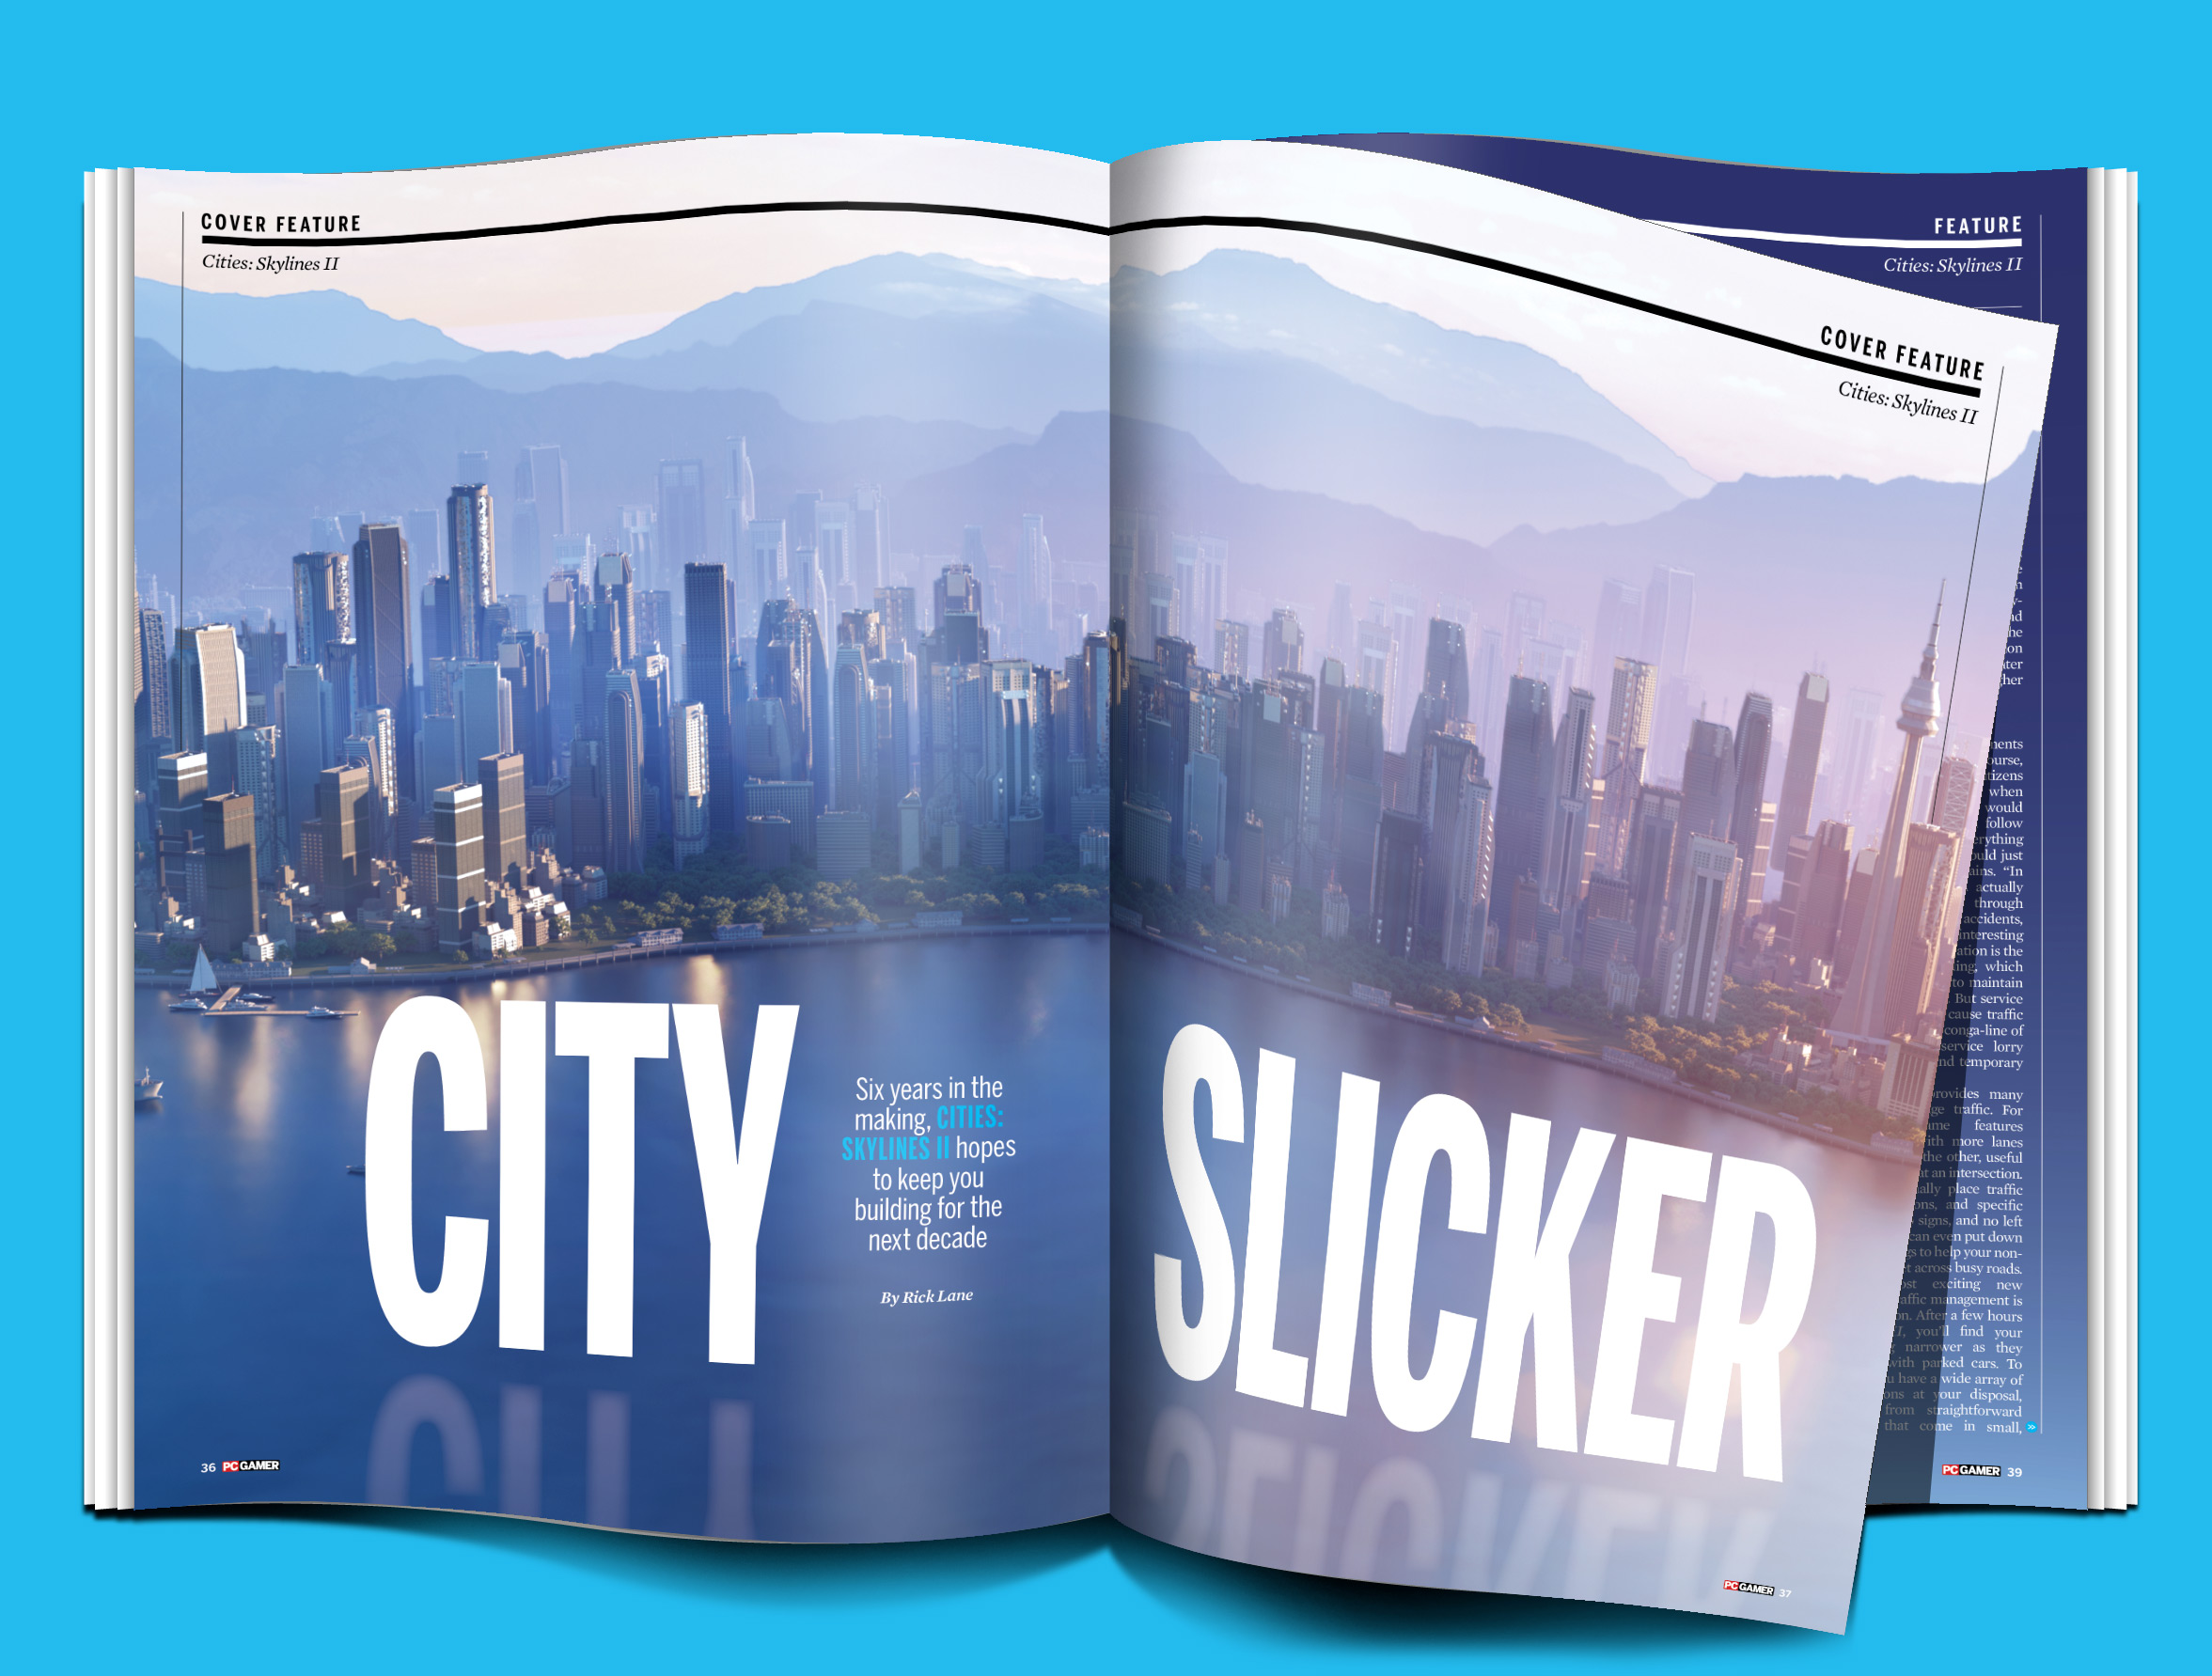 Revista PC Gamer Número Cities Skylines II